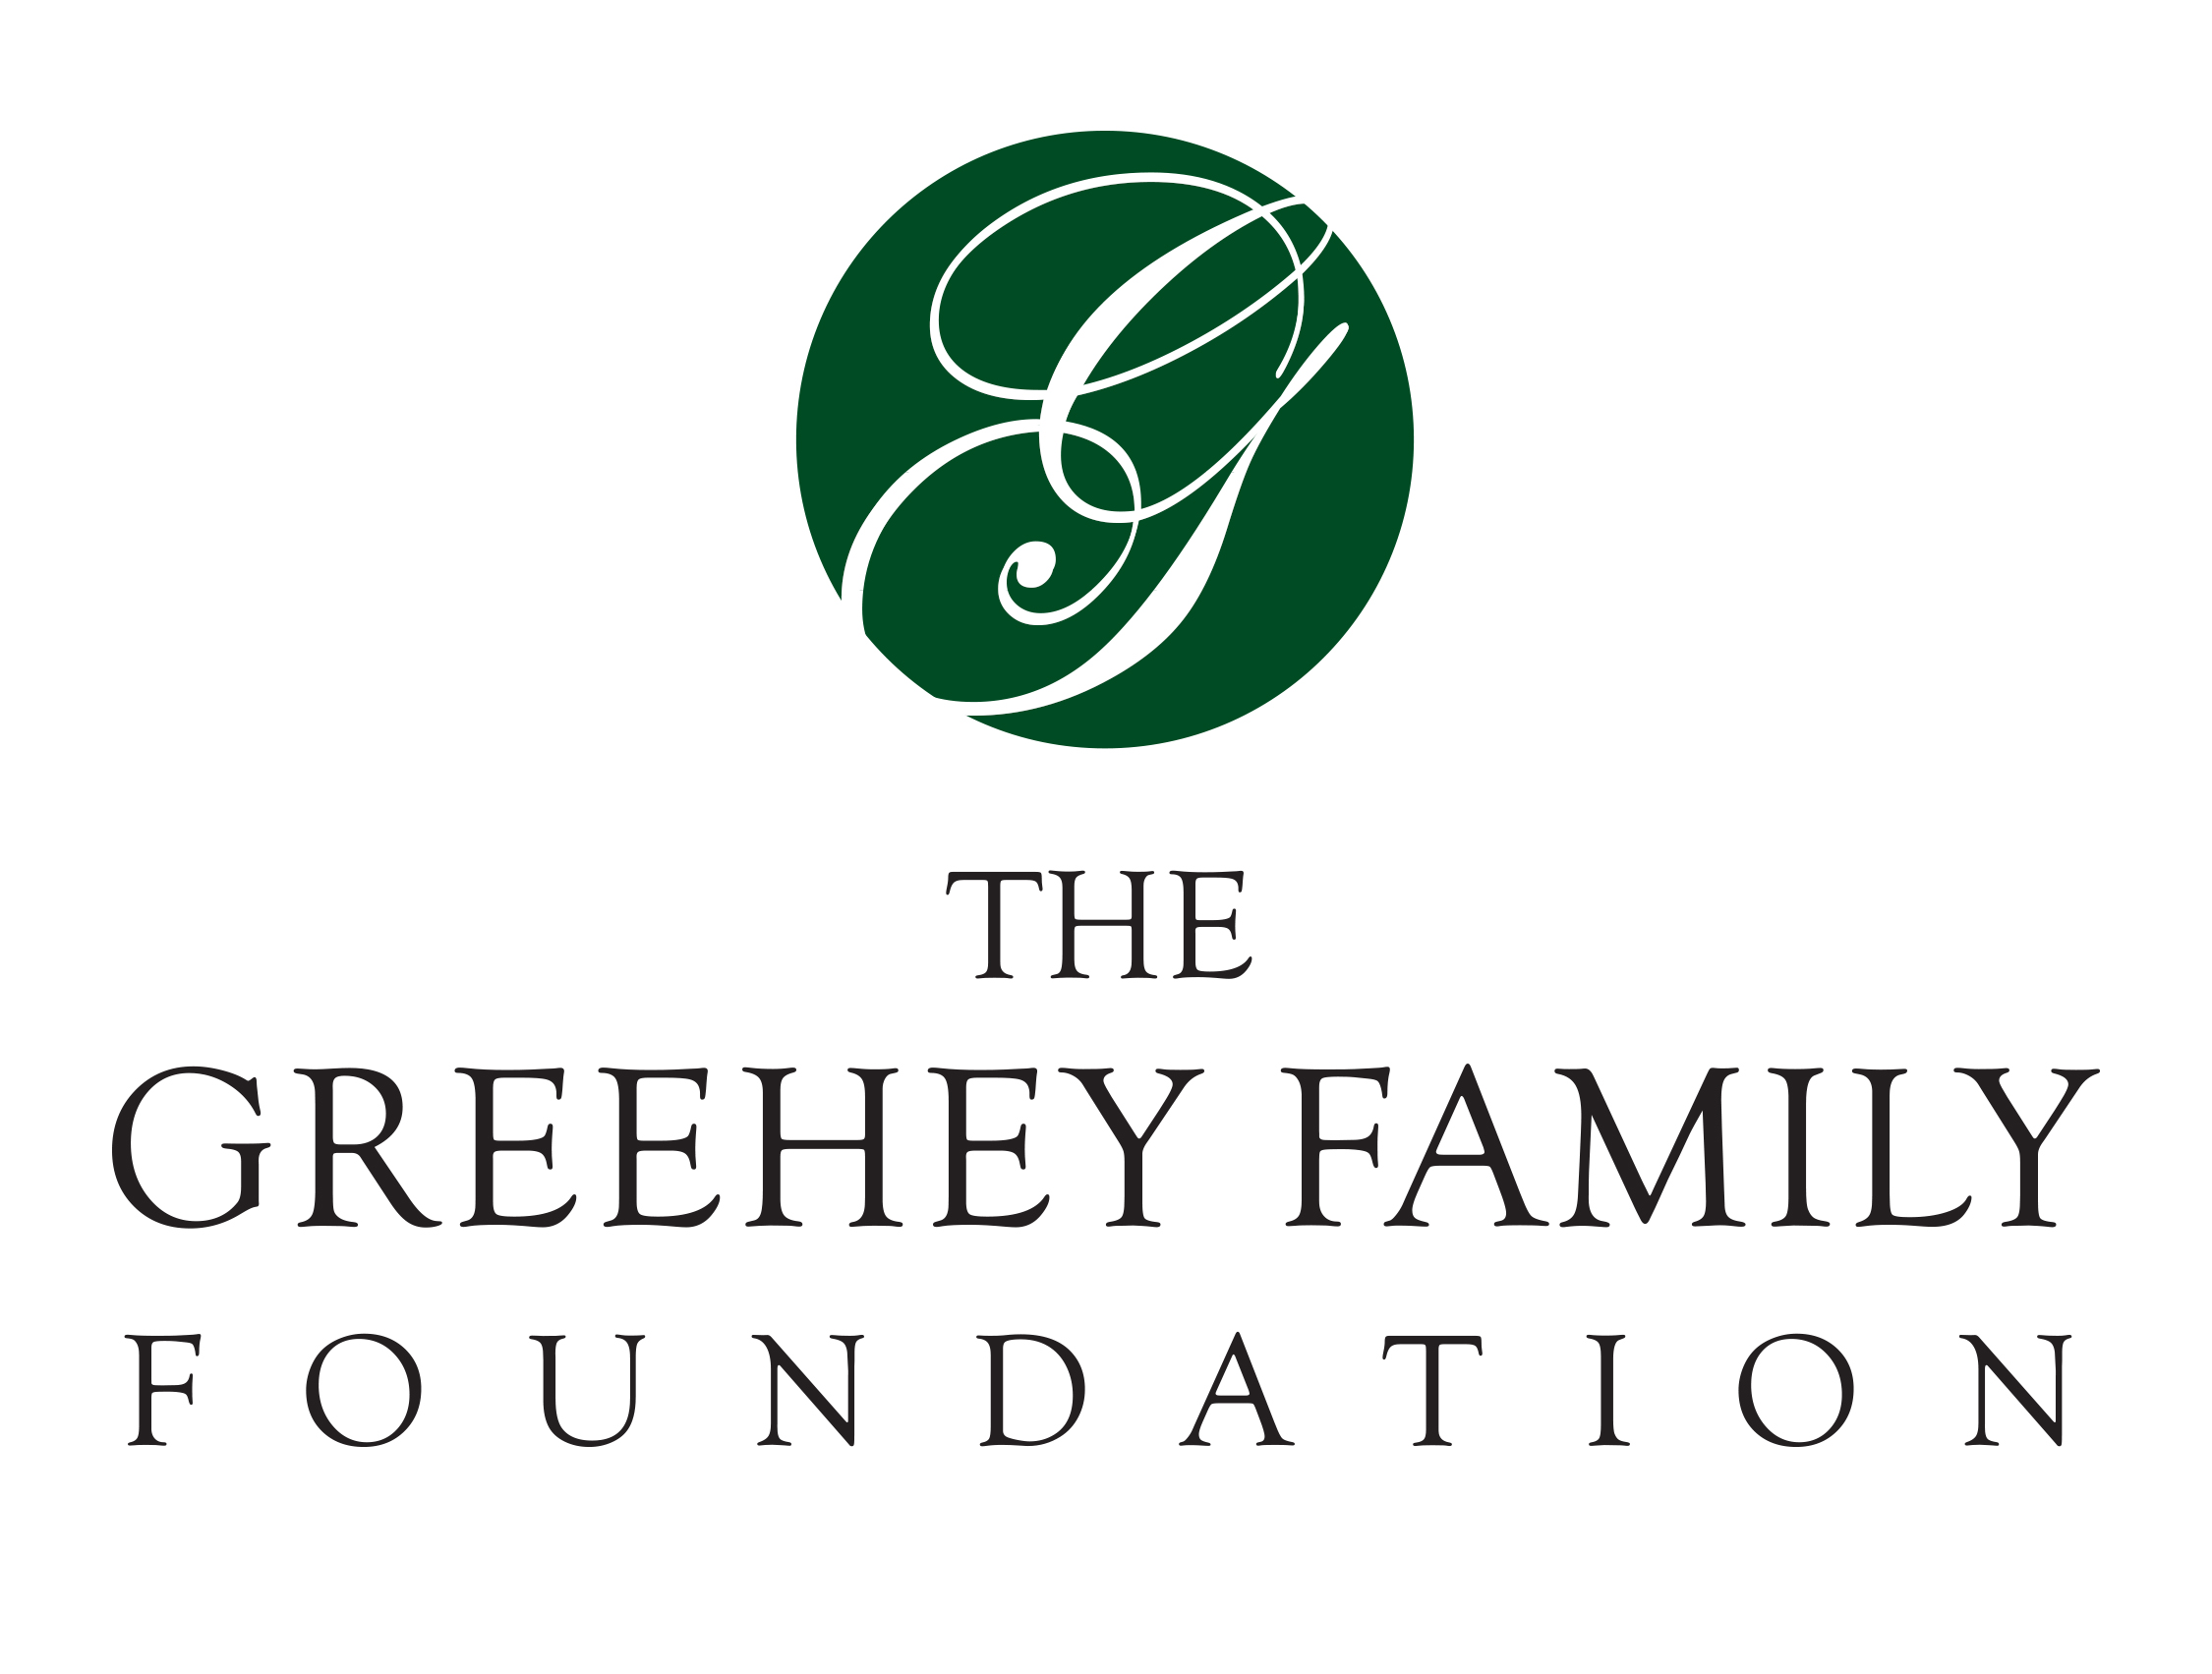 Greehey Famly Foundation